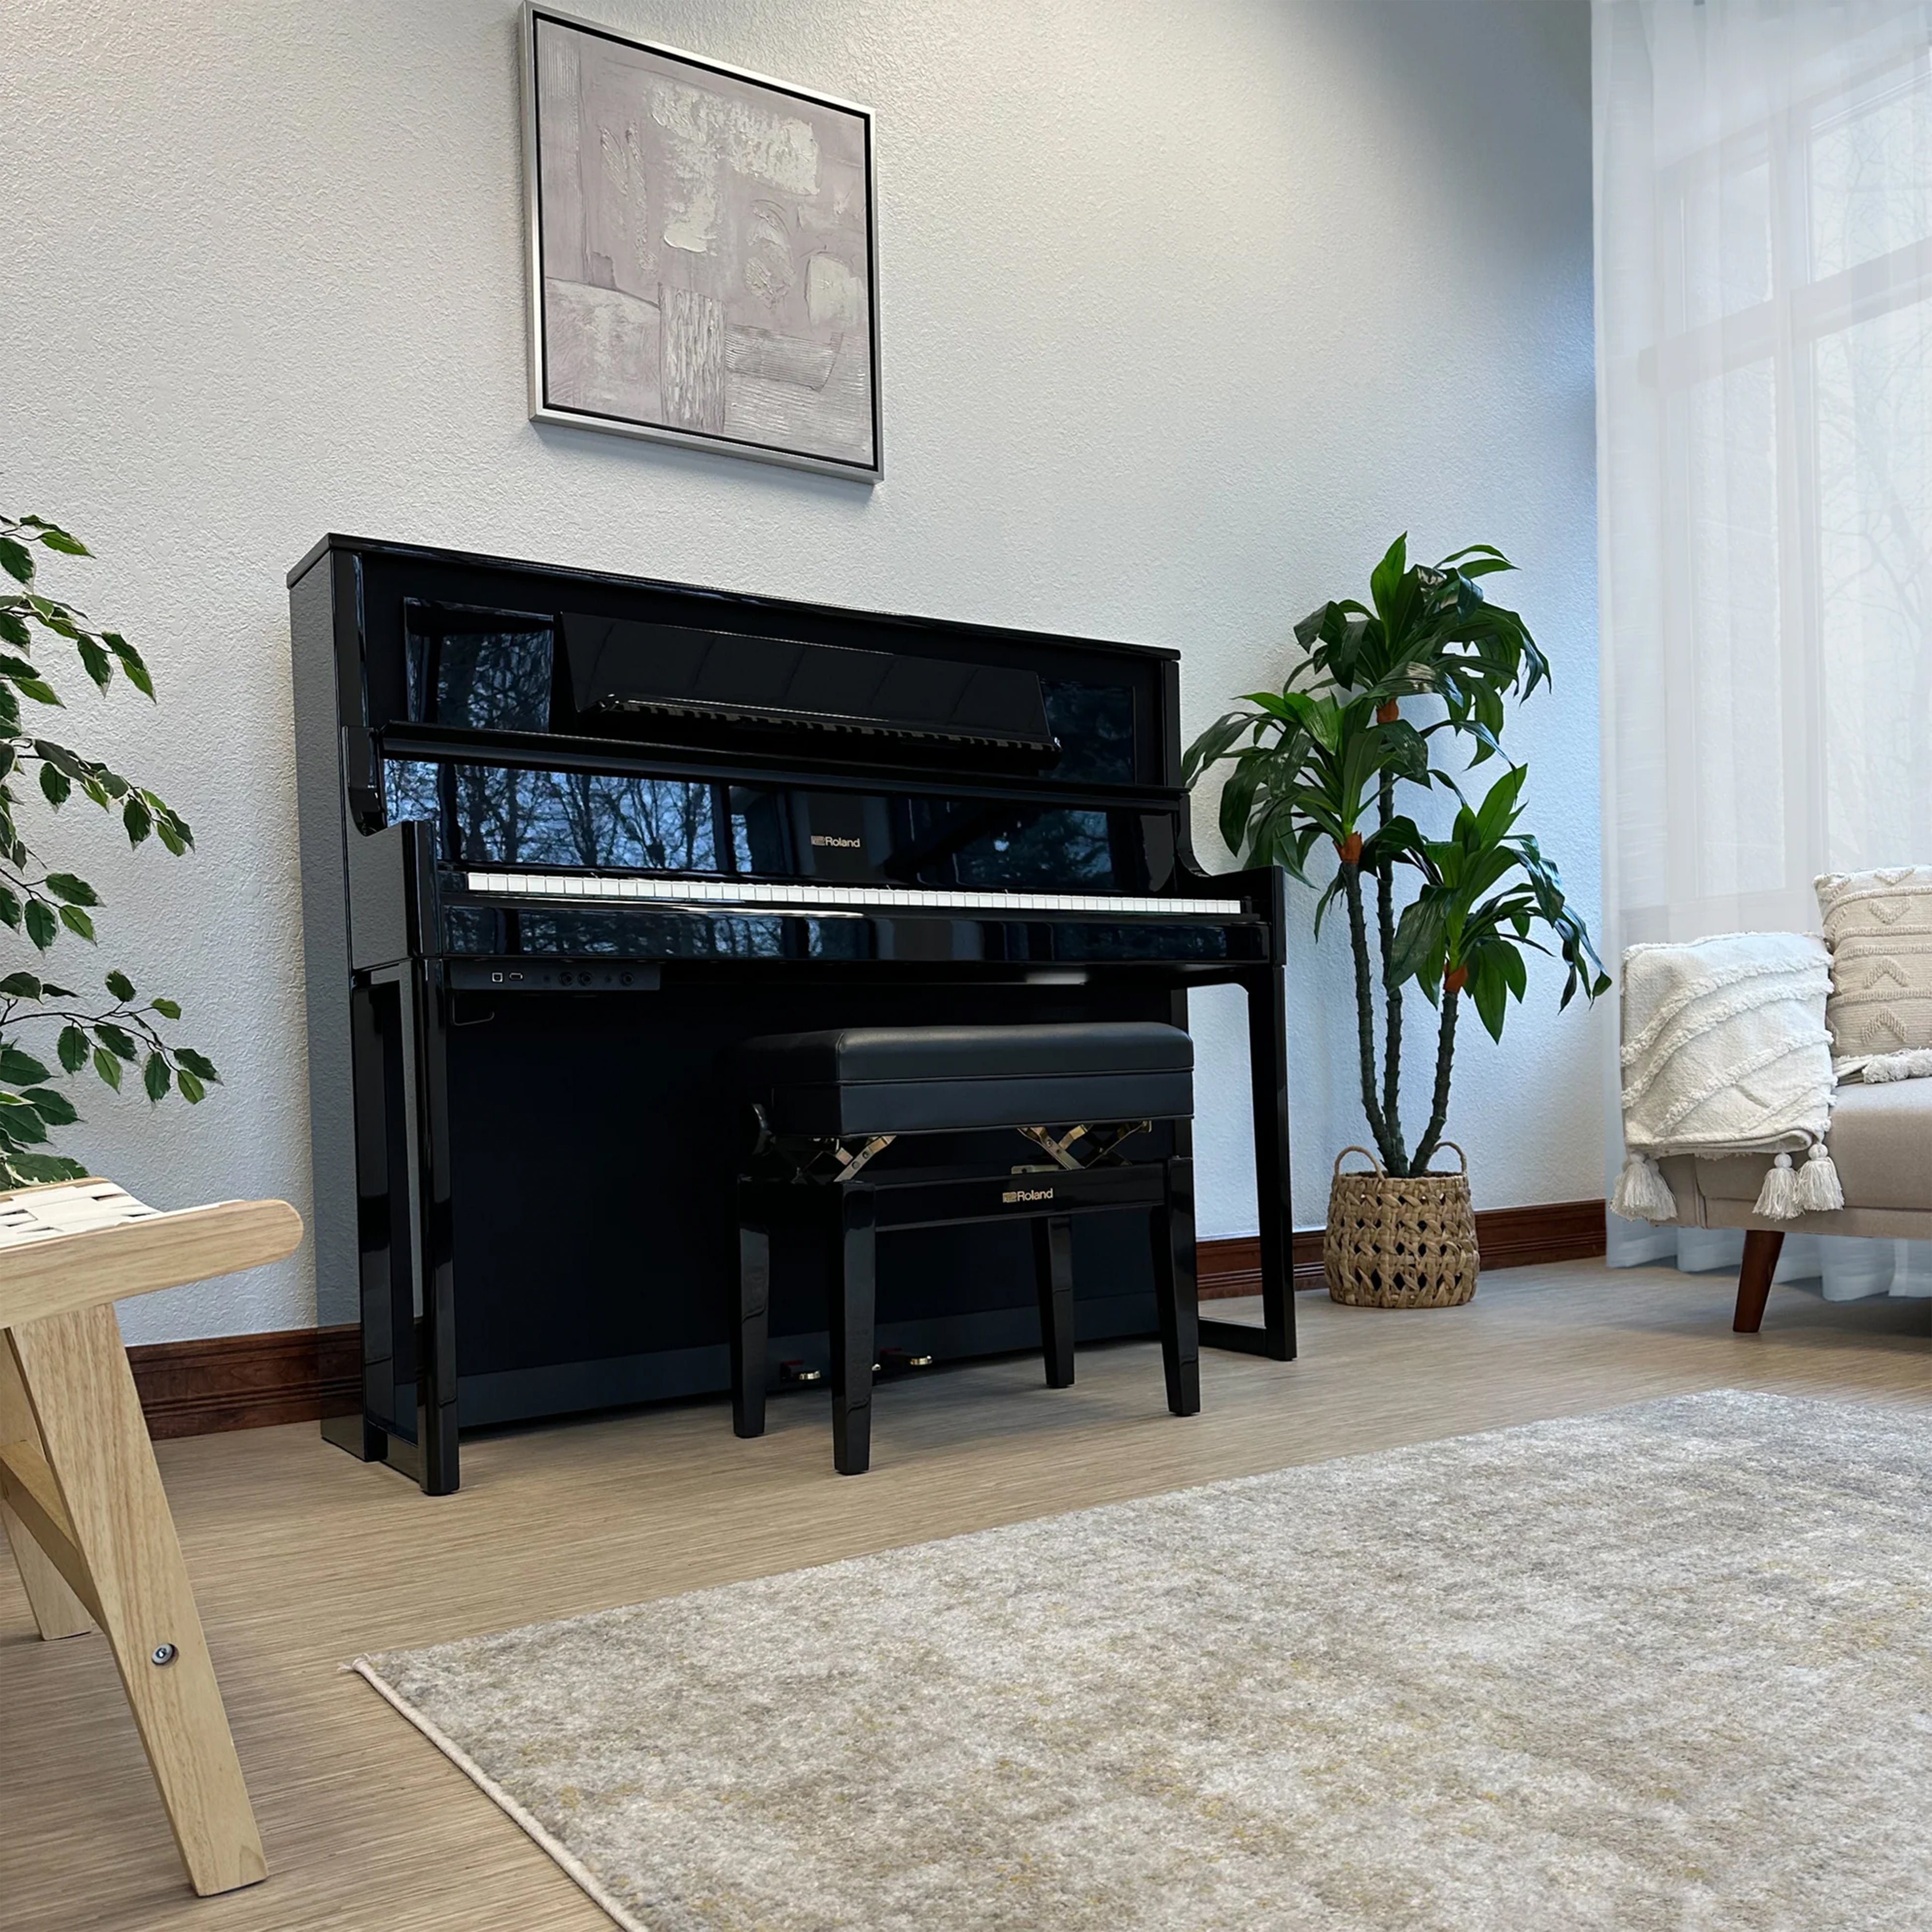 Roland LX708 Digital Piano - Polished Ebony - in a stylish living room